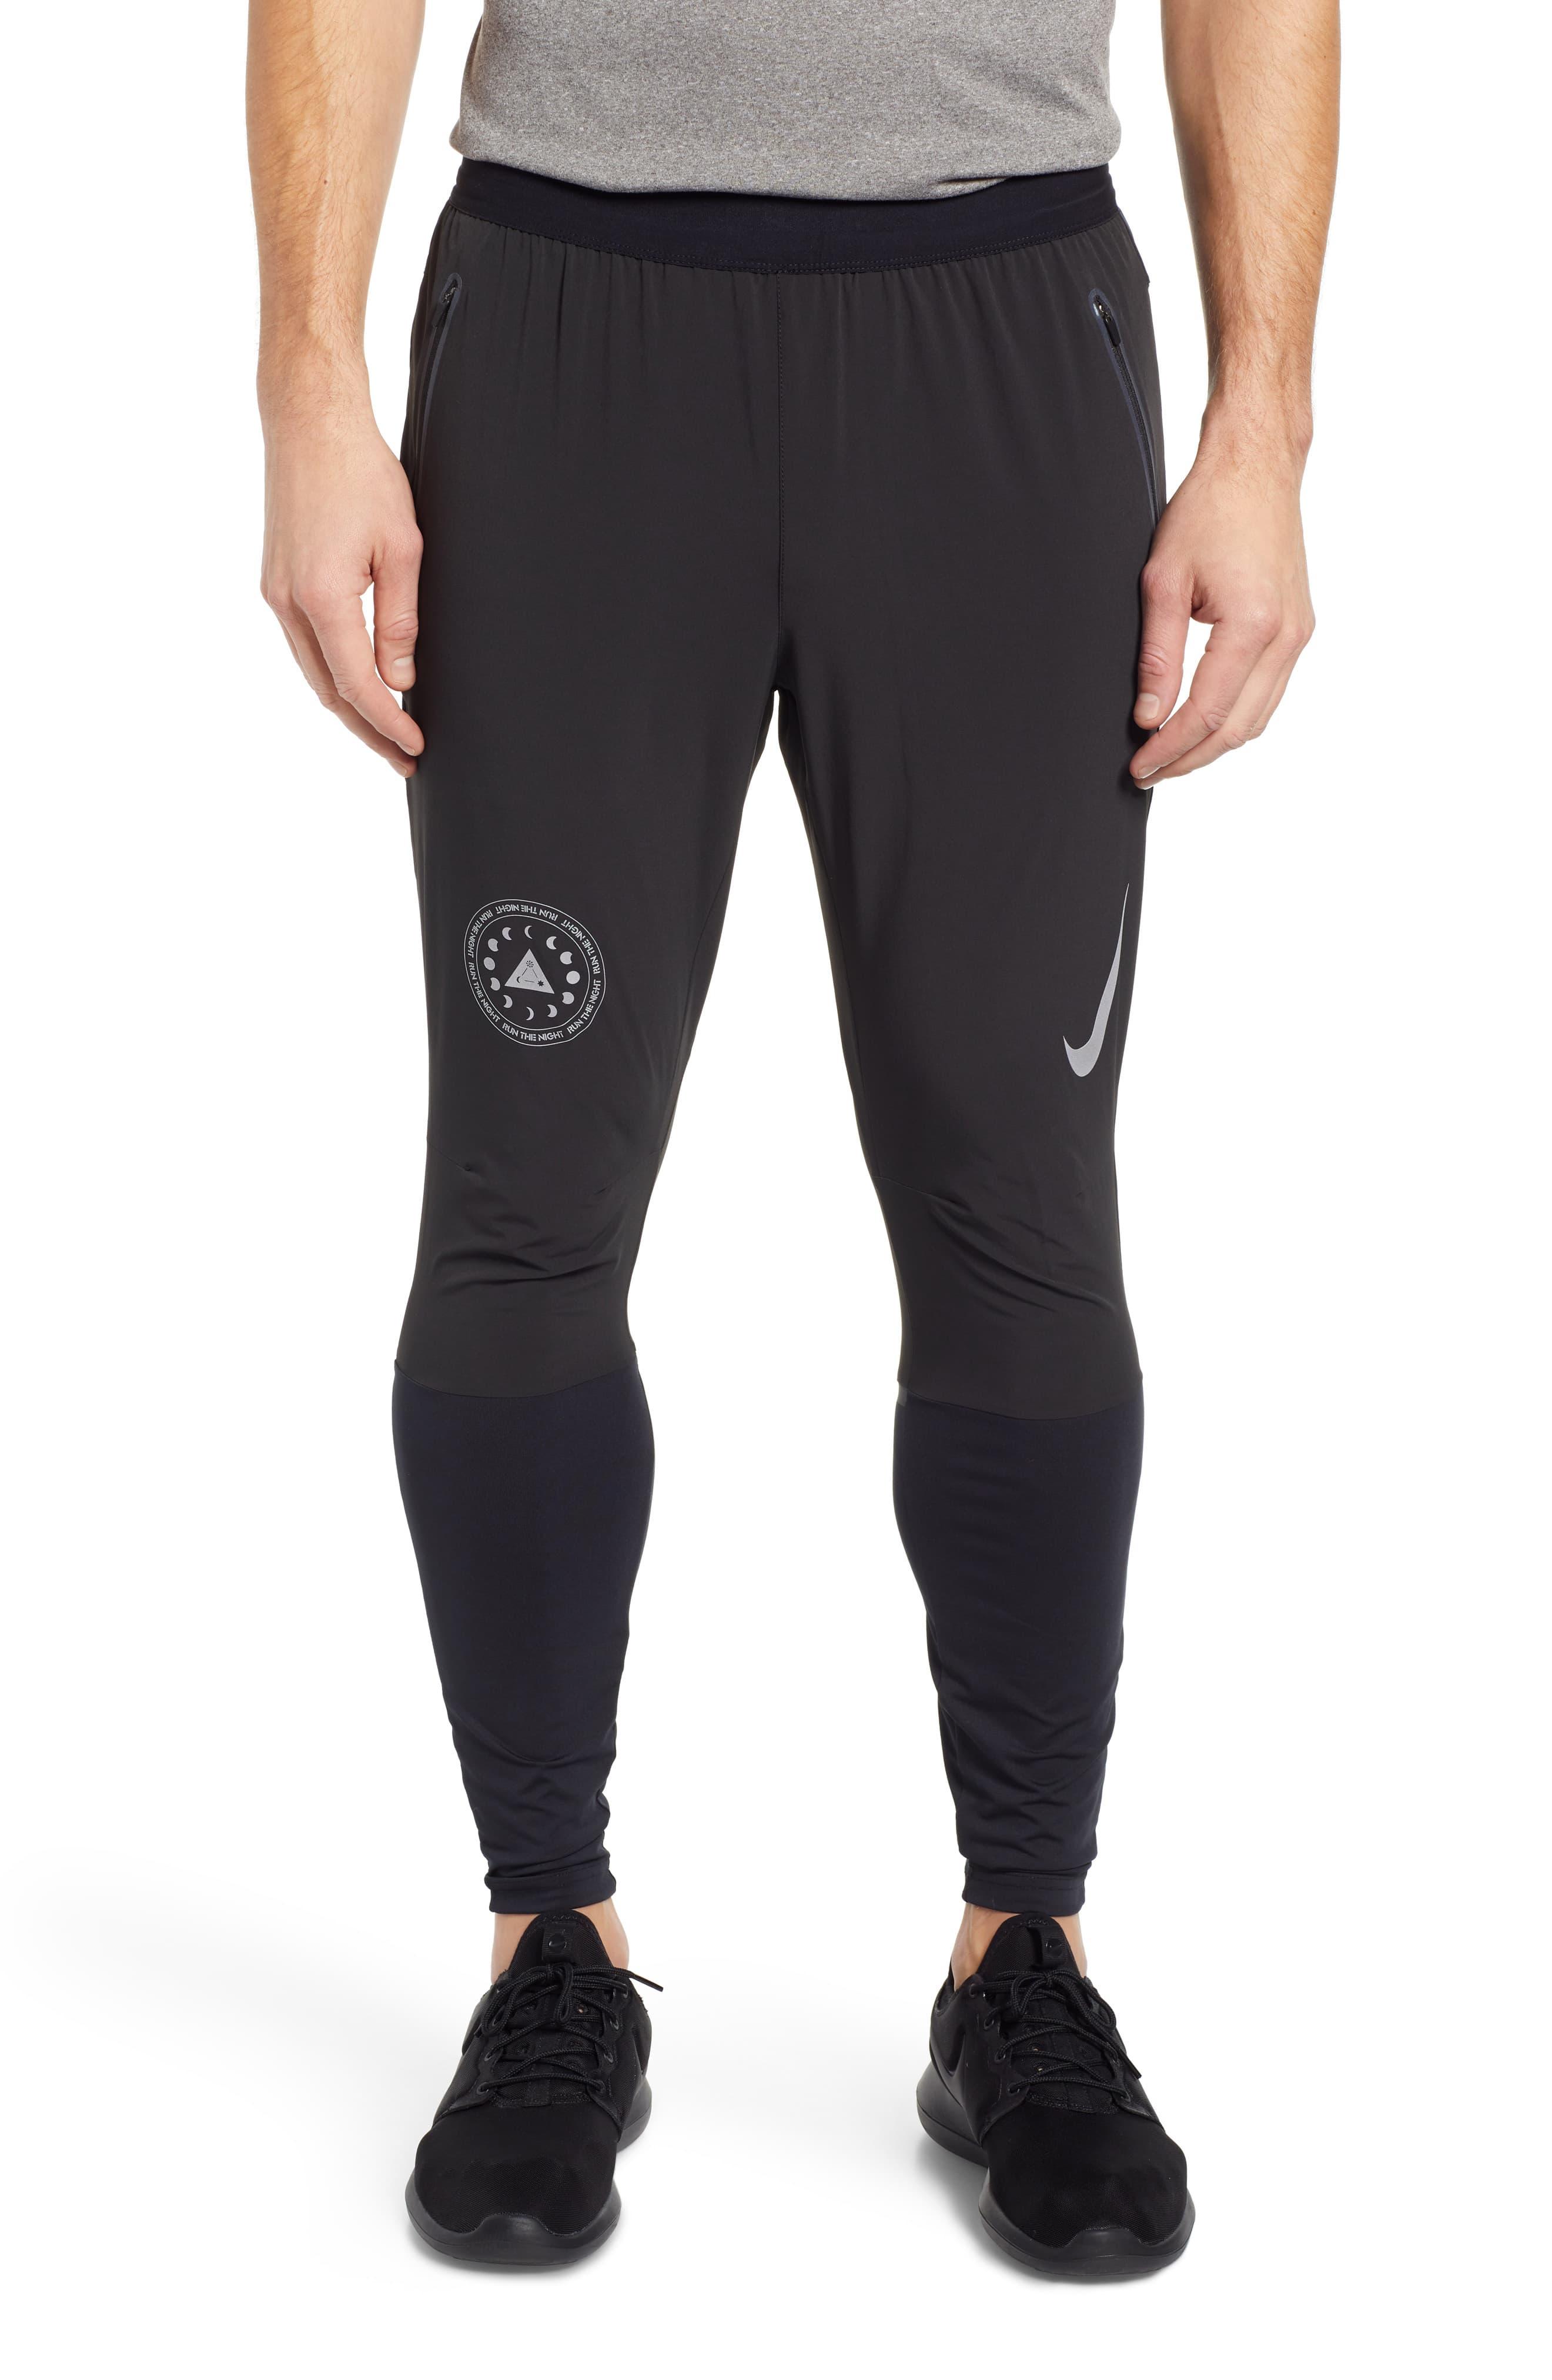 Nike Winter Solstice Swift Reflective Running Pants in Black for Men - Lyst